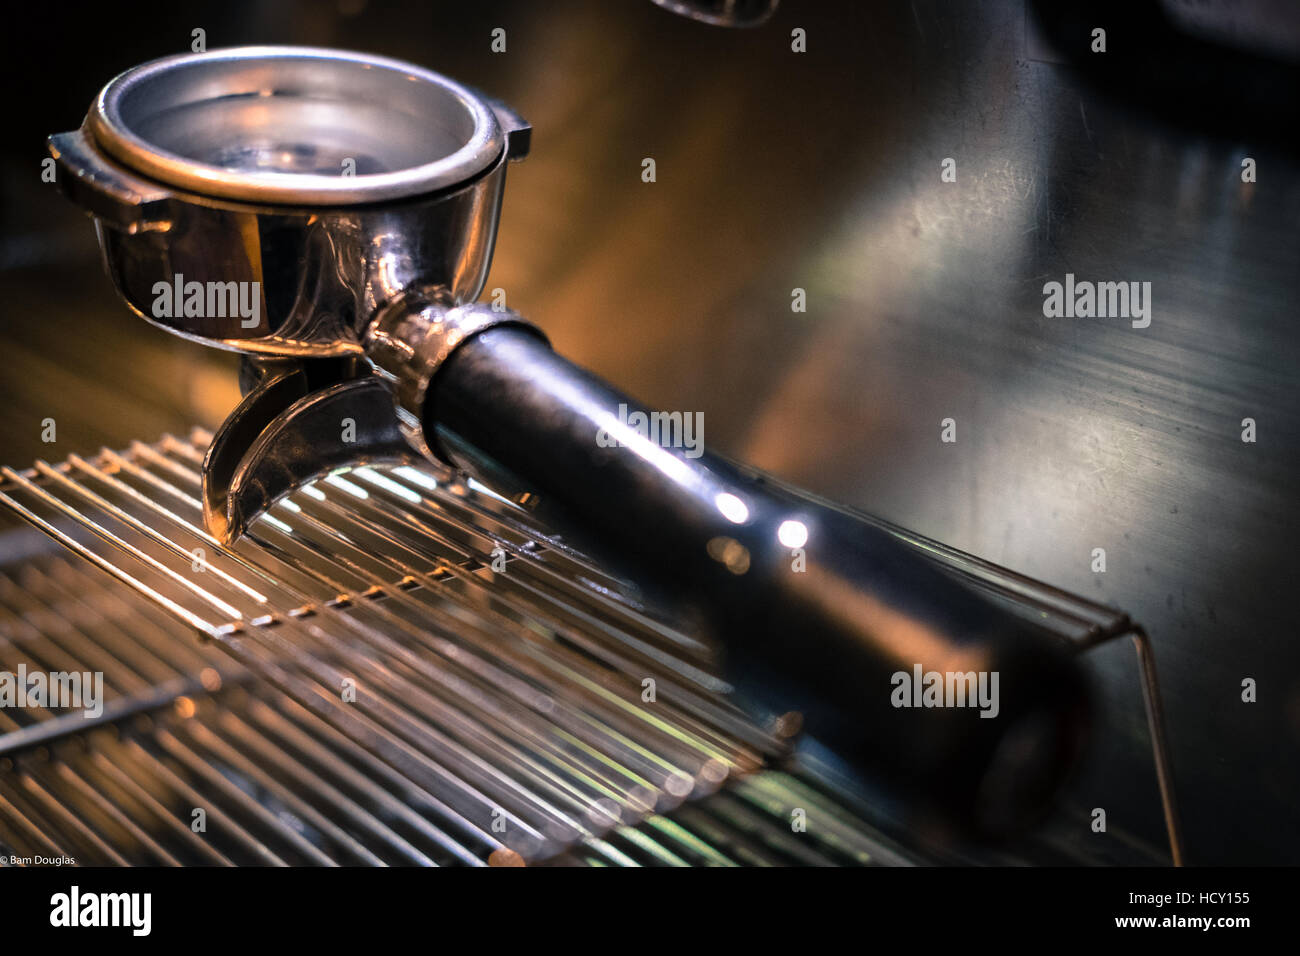 Espresso machine coffee ground holder Stock Photo